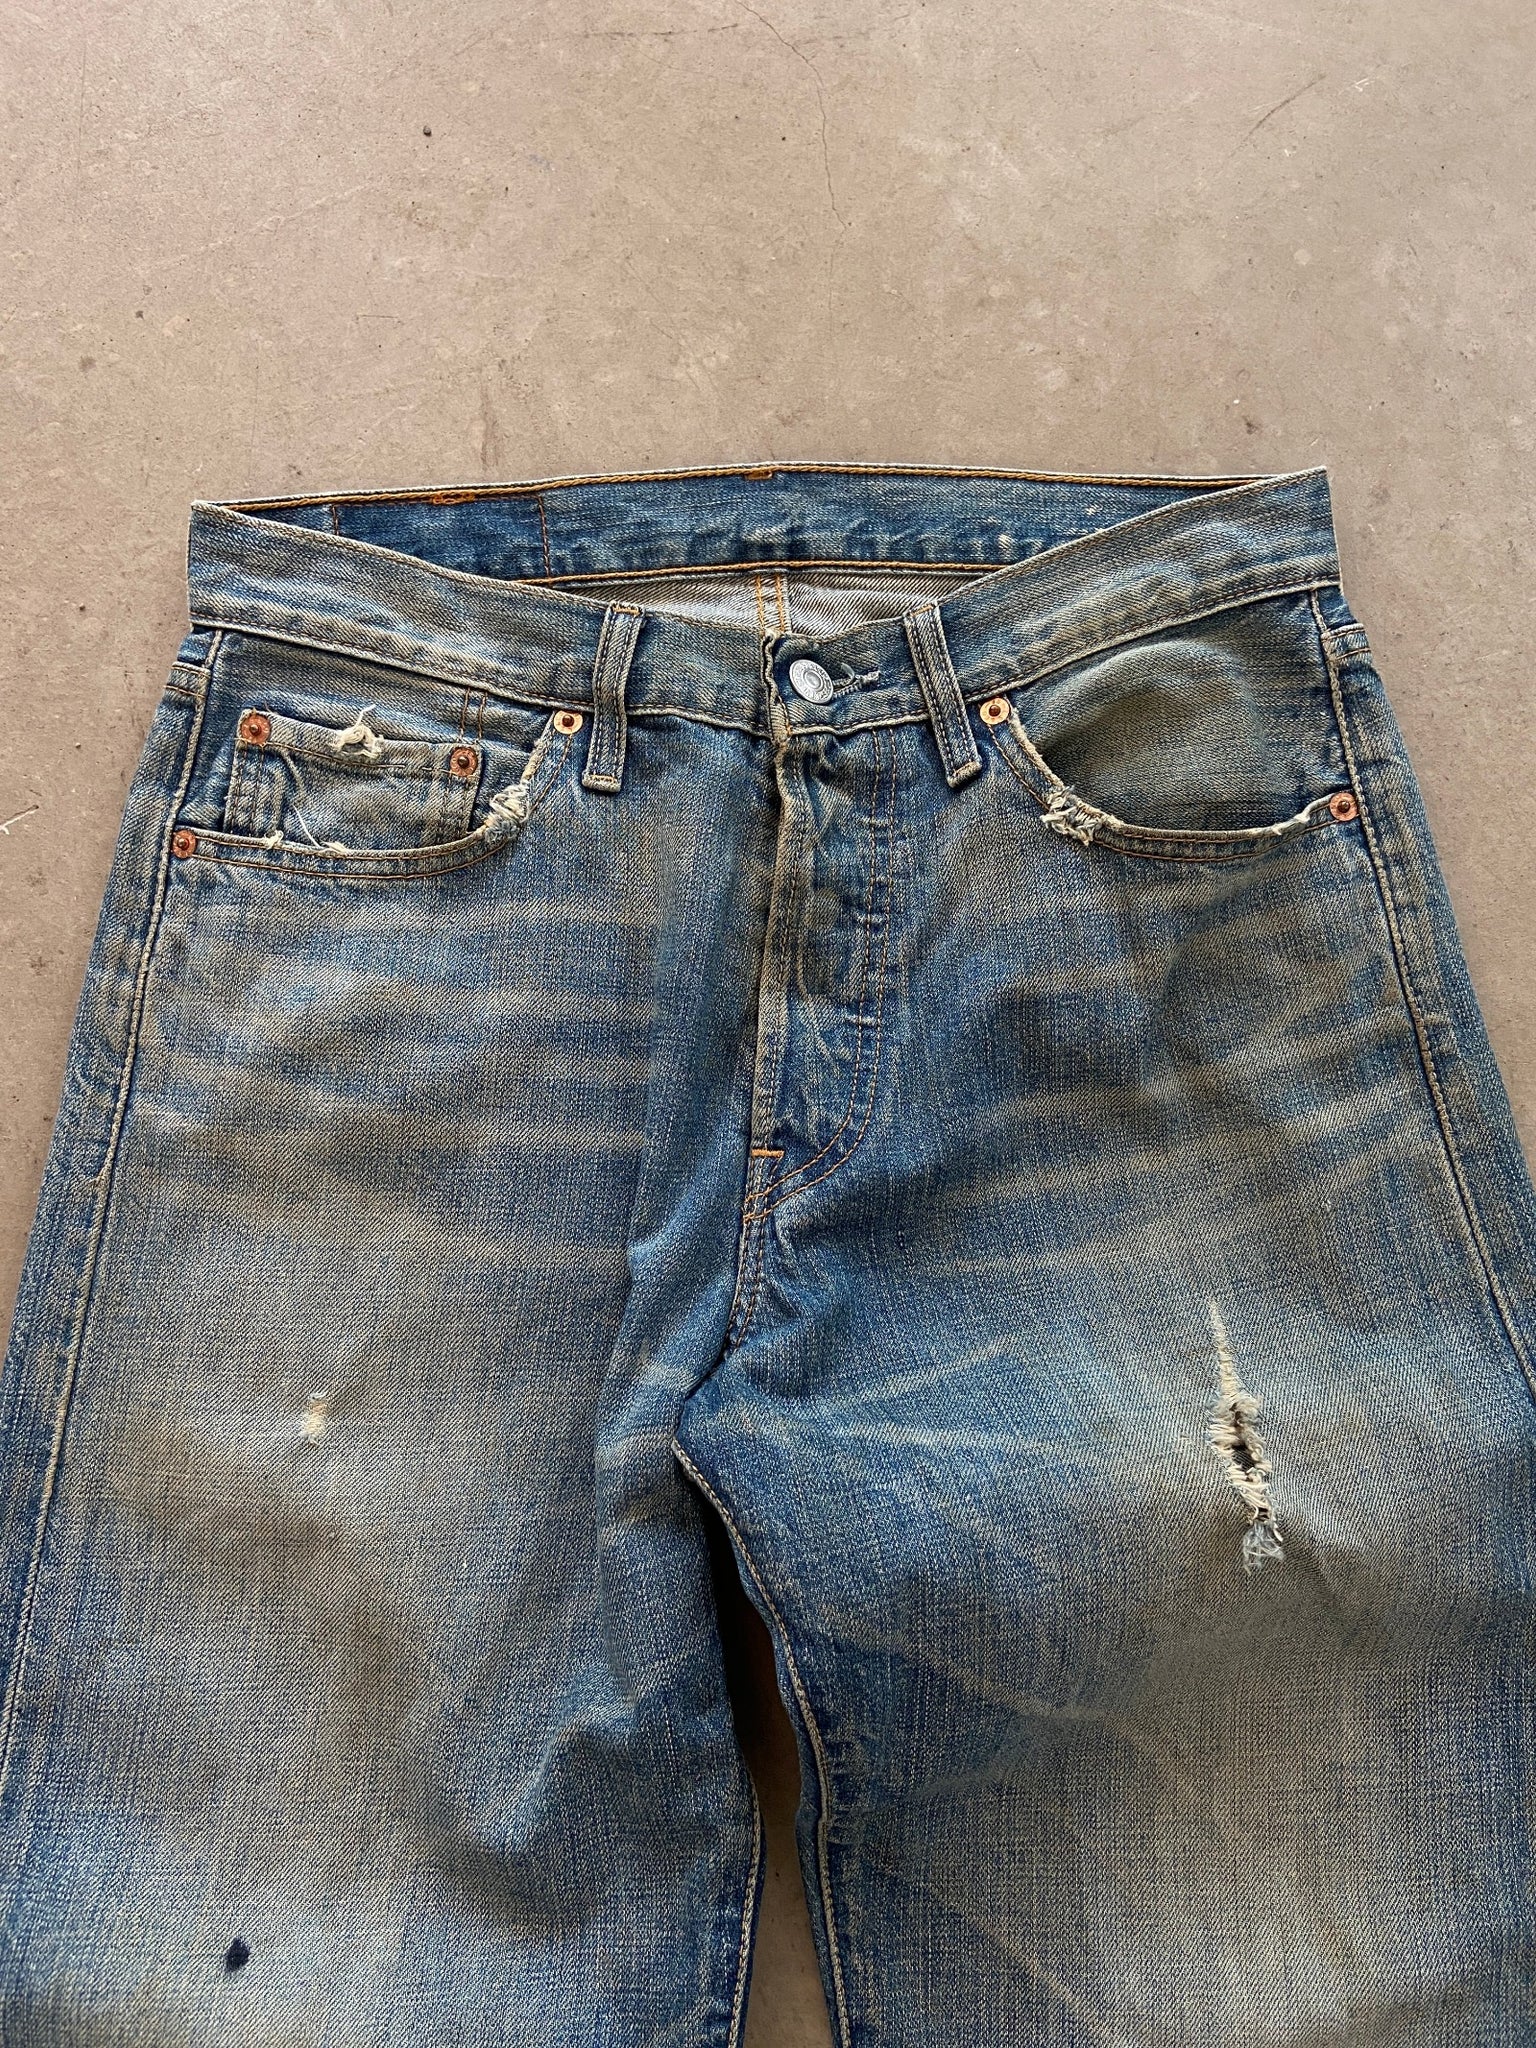 1990's Levi's 501 Jeans - 29 x 32